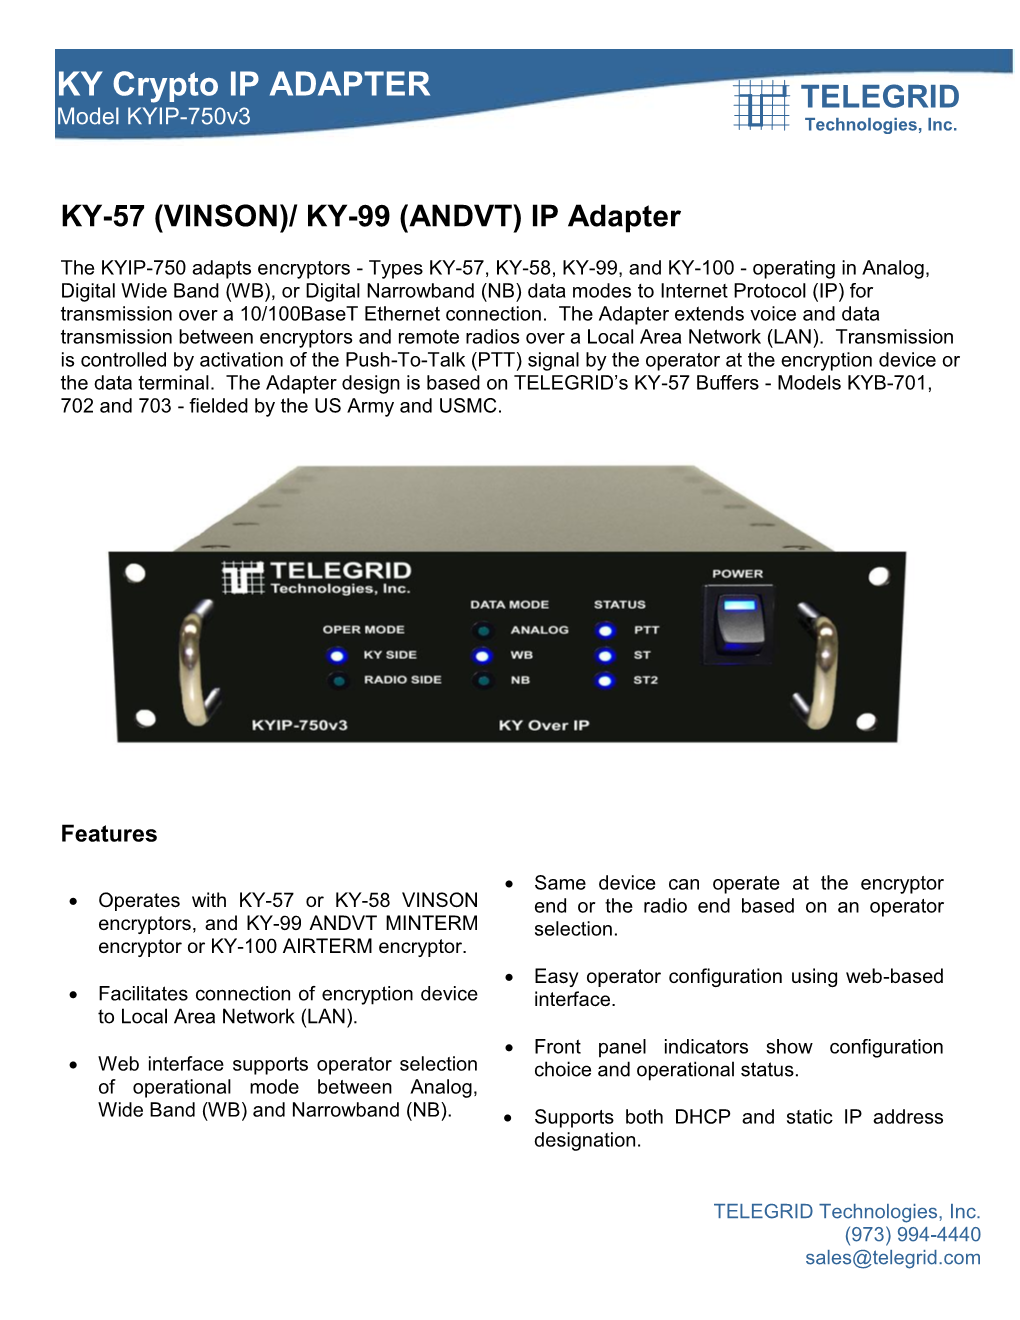 KY Crypto IP ADAPTER TELEGRID Model KYIP-750V3 Technologies, Inc